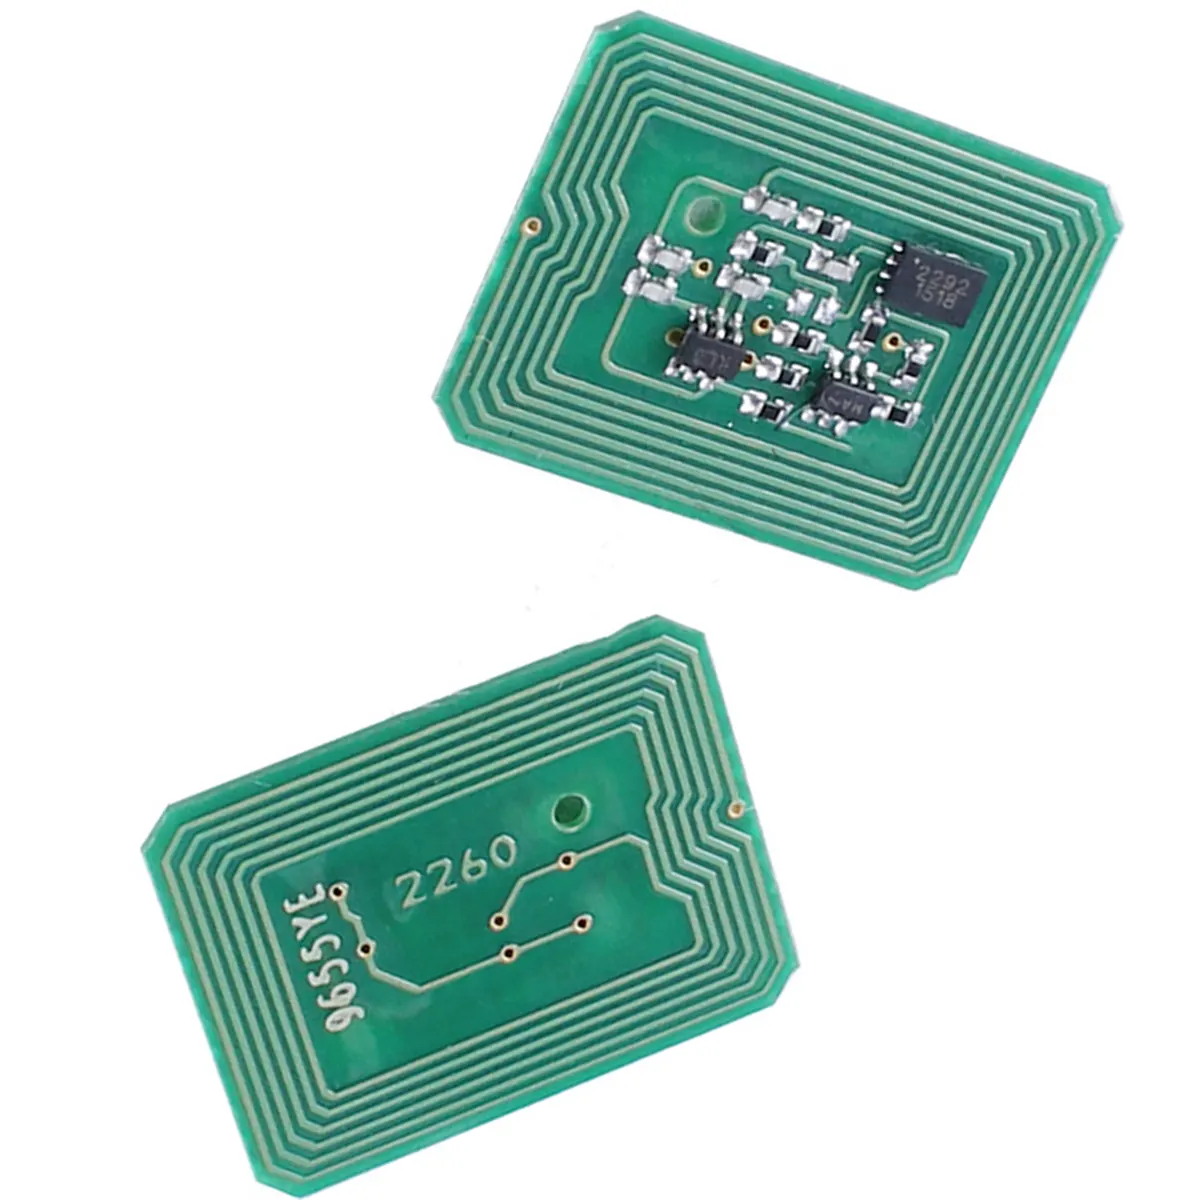 Chips de cartucho de tóner chips para OKI C822A3 IMPRESORAS DE PÁGINA A COLOR chips láser negros/para OKI DataProducts Ribbons